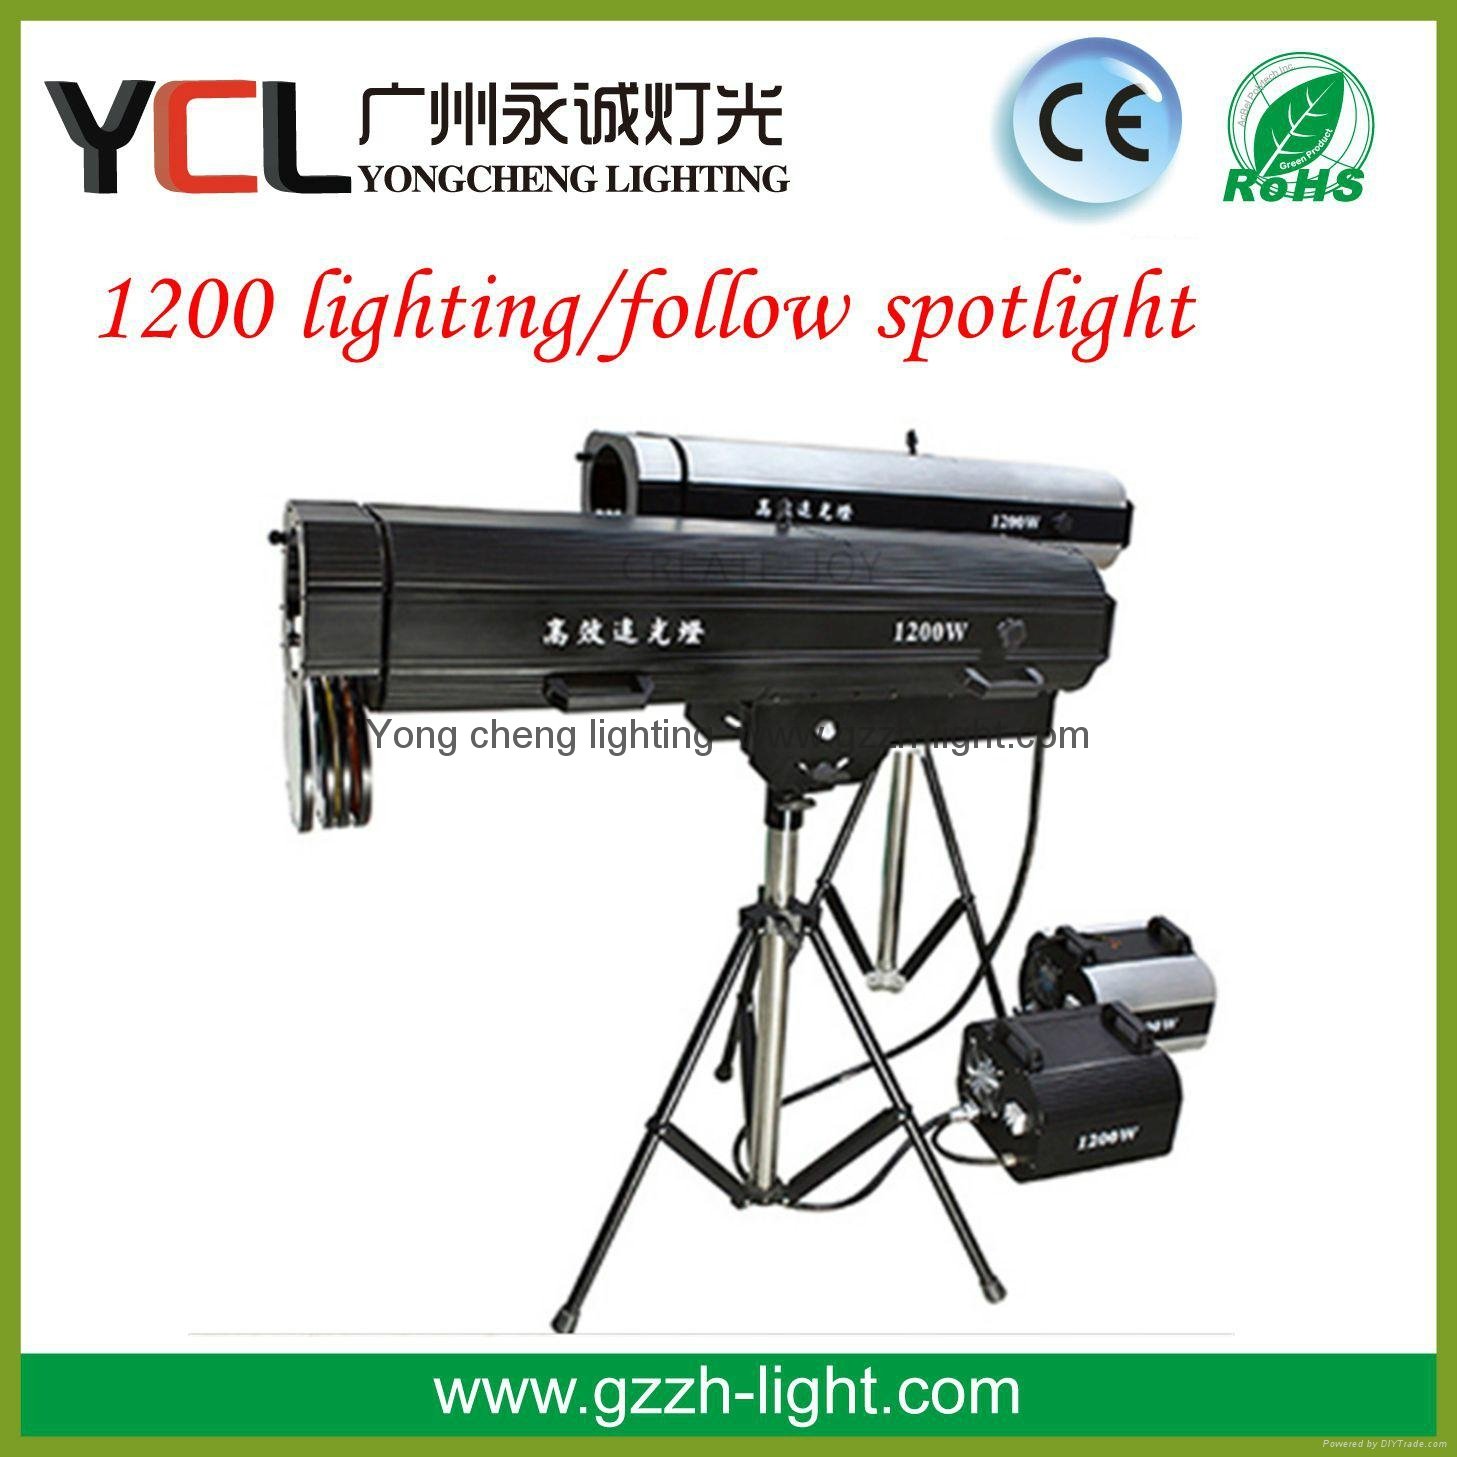 follow spot 1200 lighting/follow spotlight 4